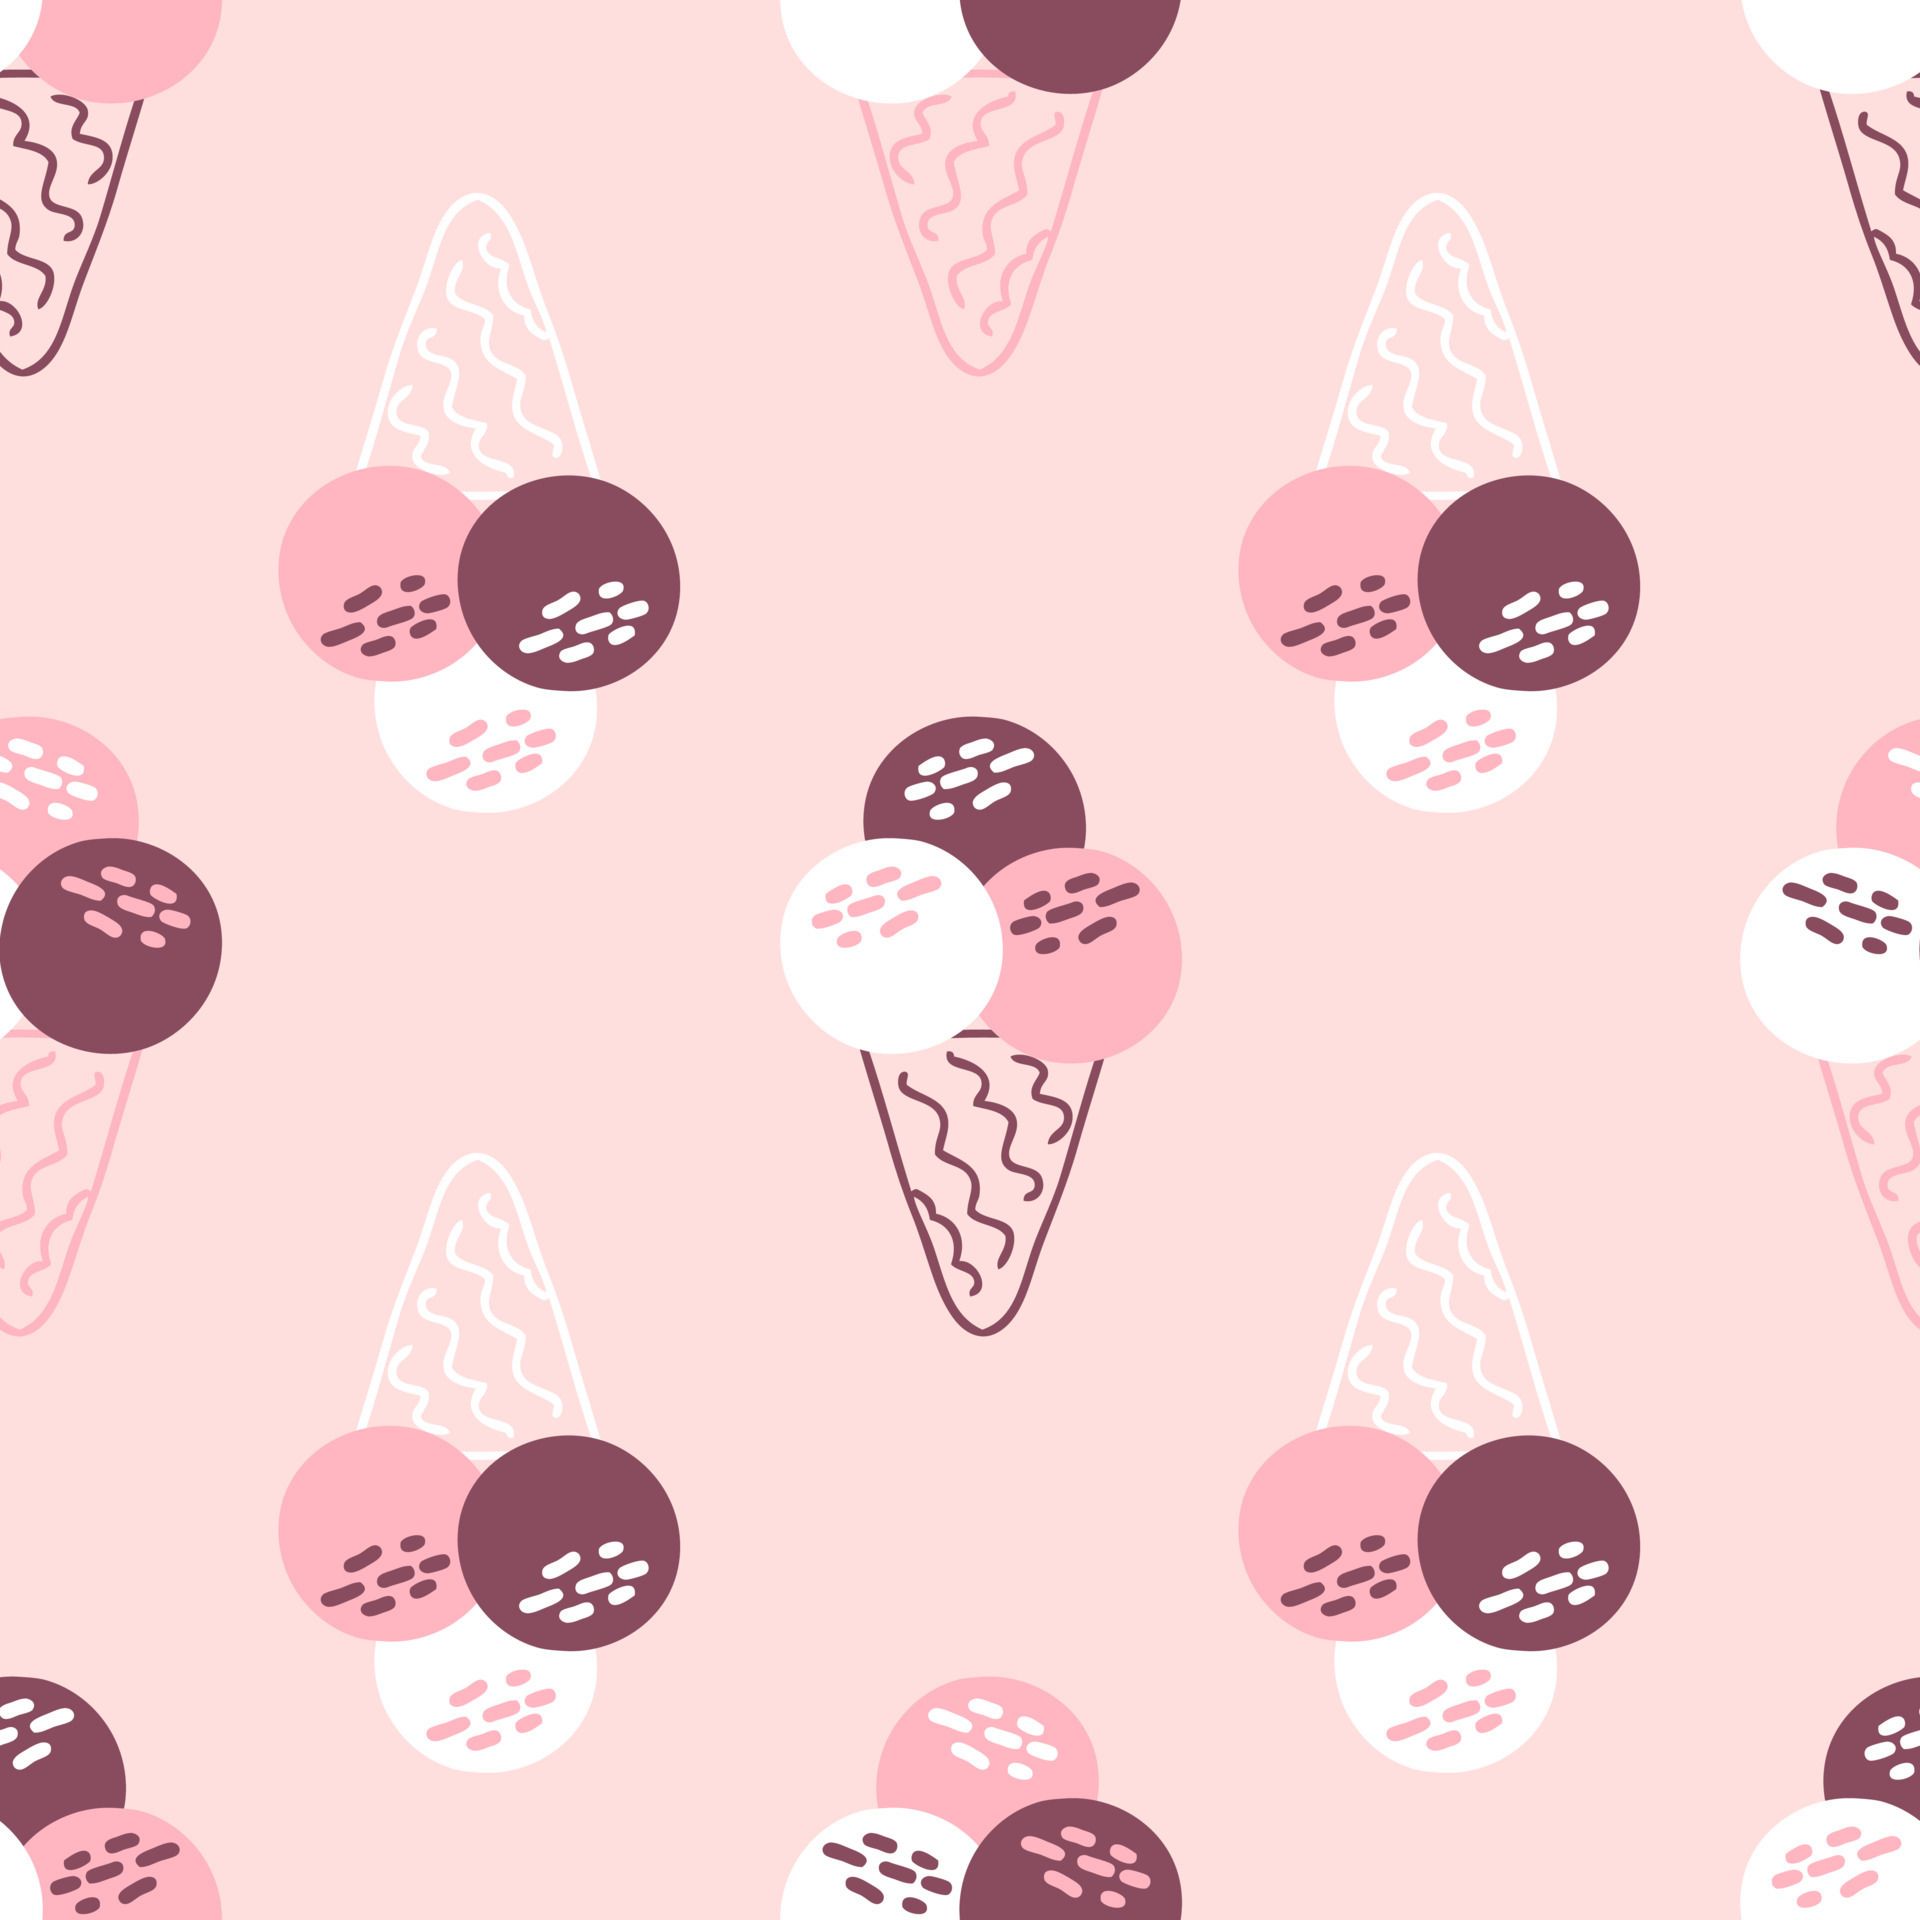 Retro aesthetic seamless pattern with simple ice creams